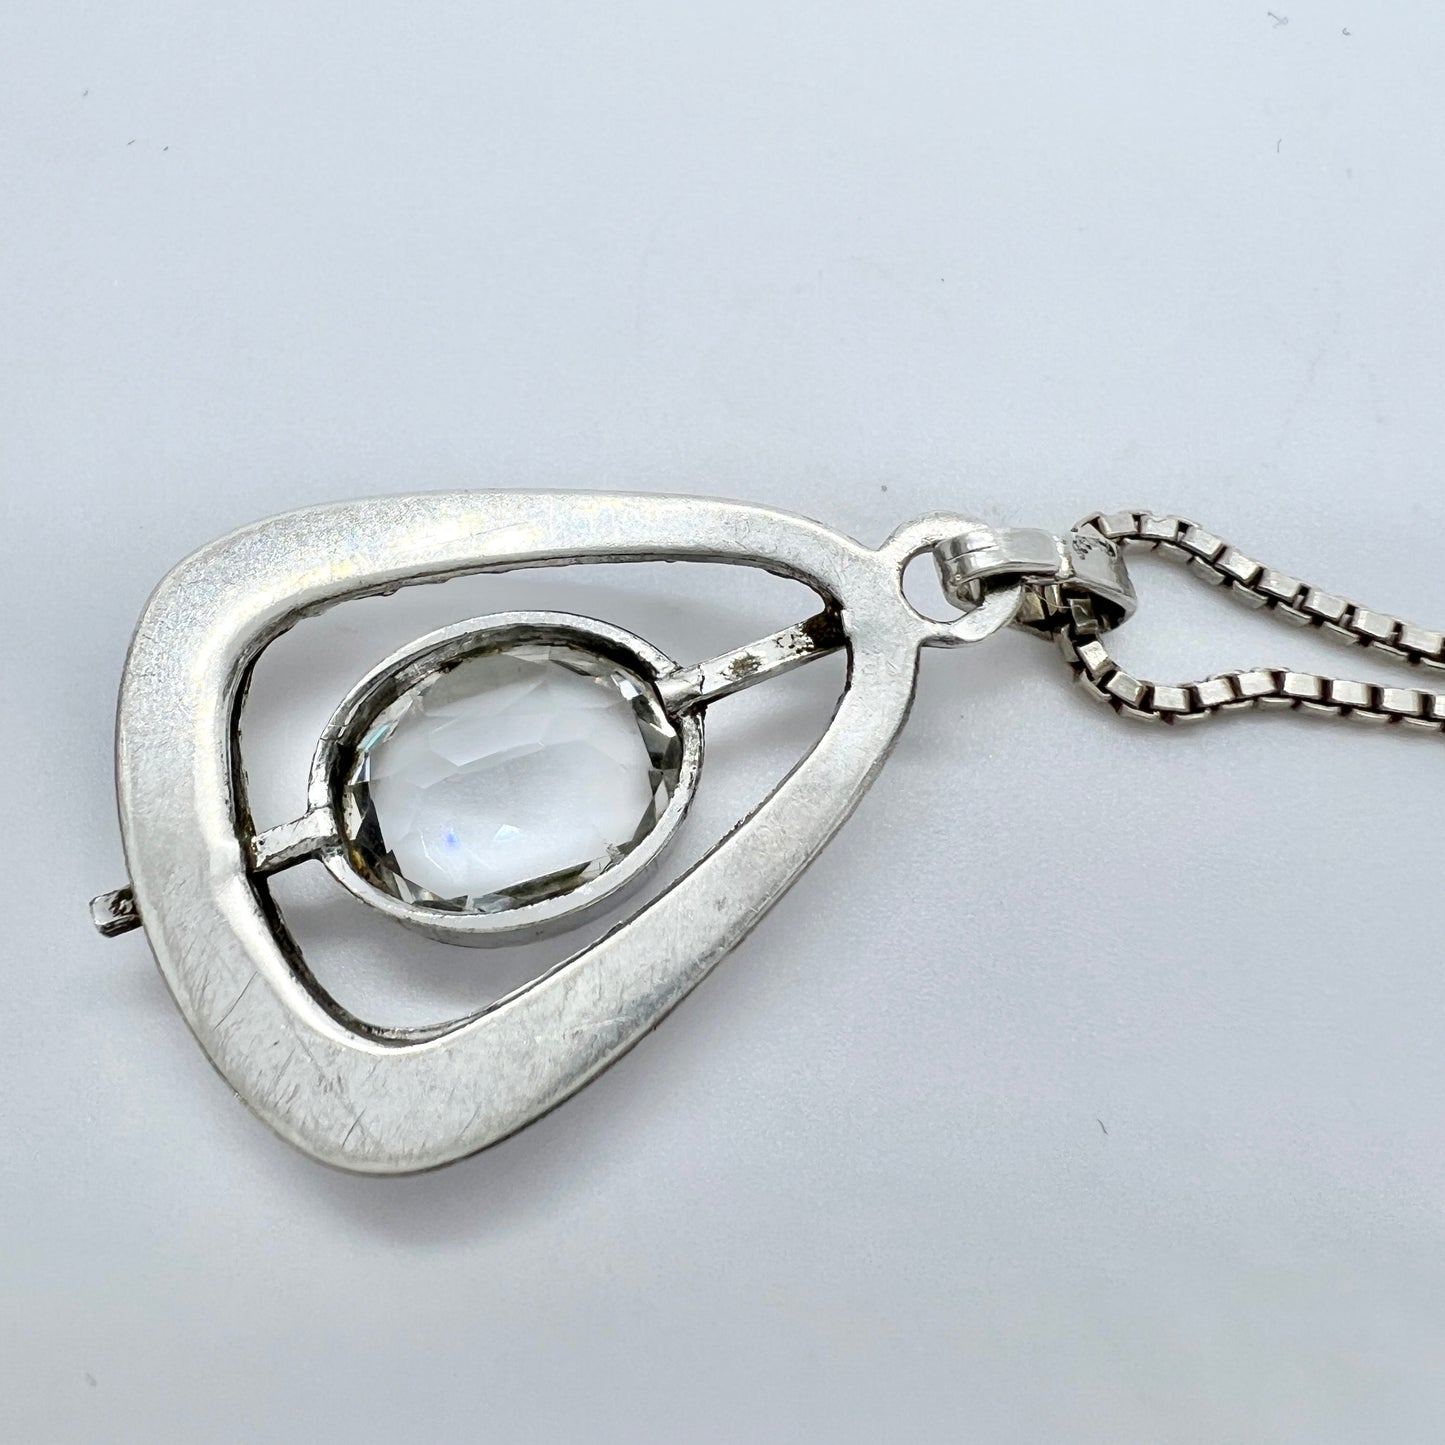 Kollmar & Jourdan, Germany c 1960s. Solid Silver Quartz Pendant Necklace.